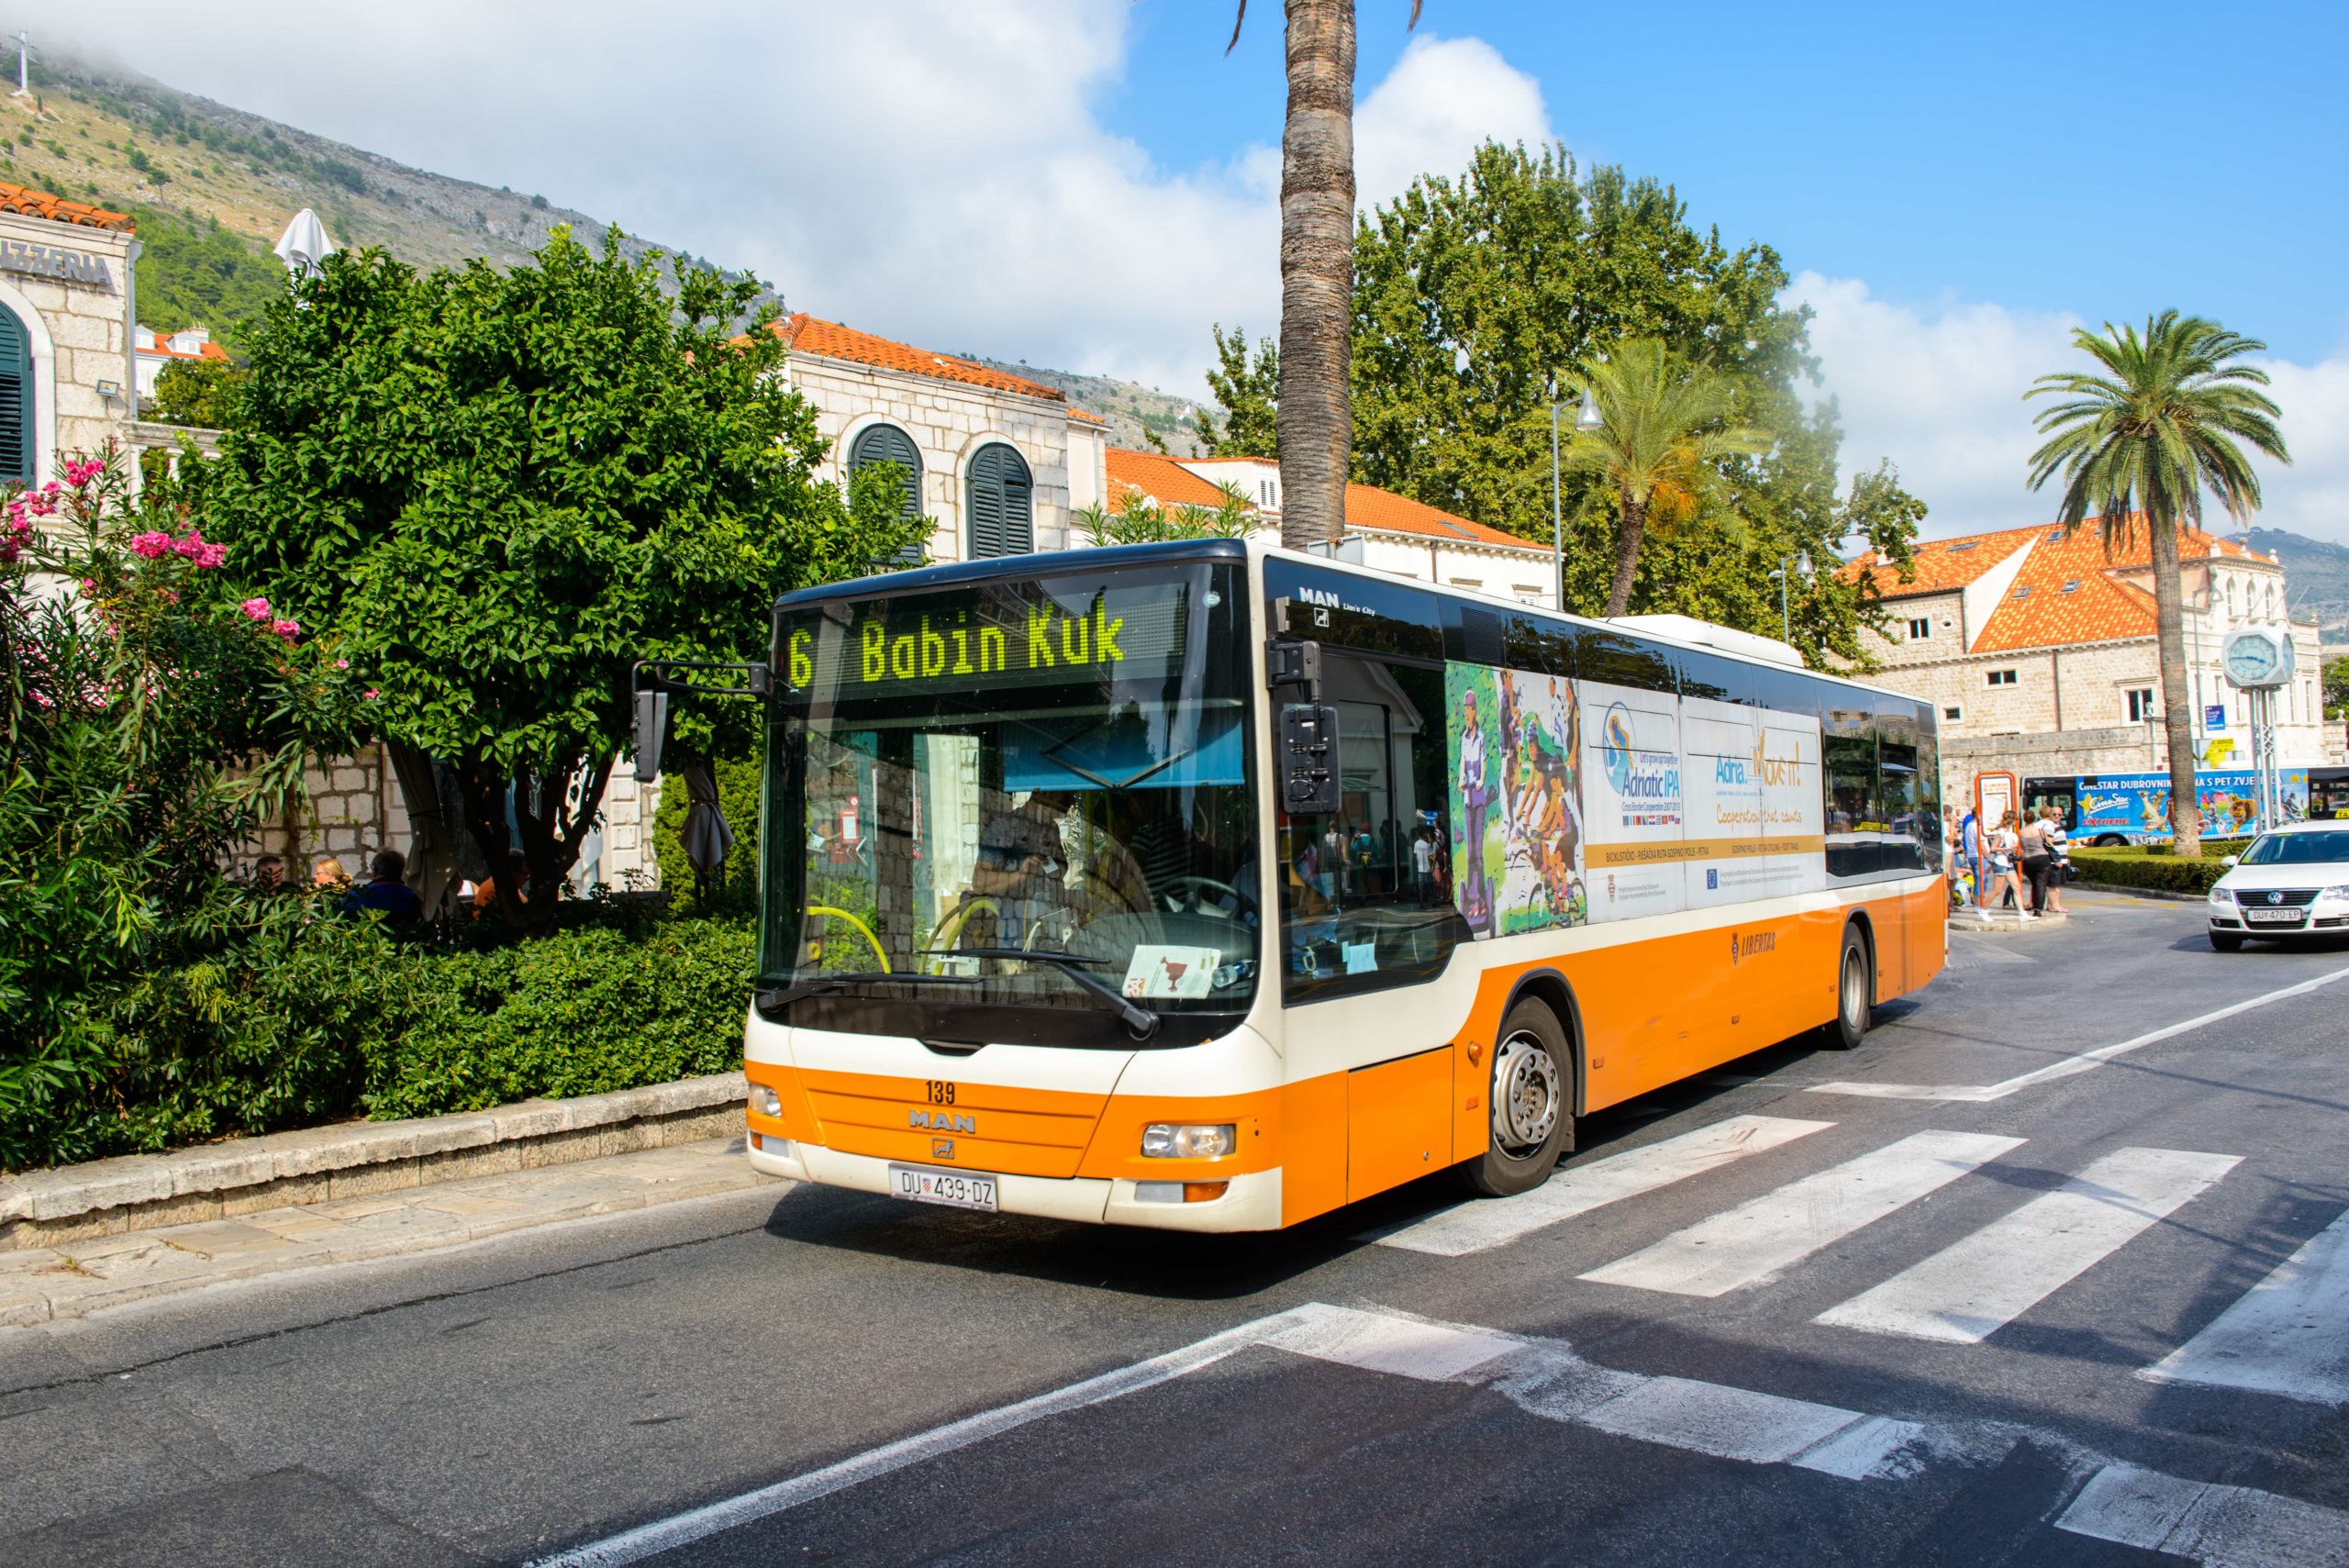 A number 6 bus with destination Babin Kuk in Dubrovnik